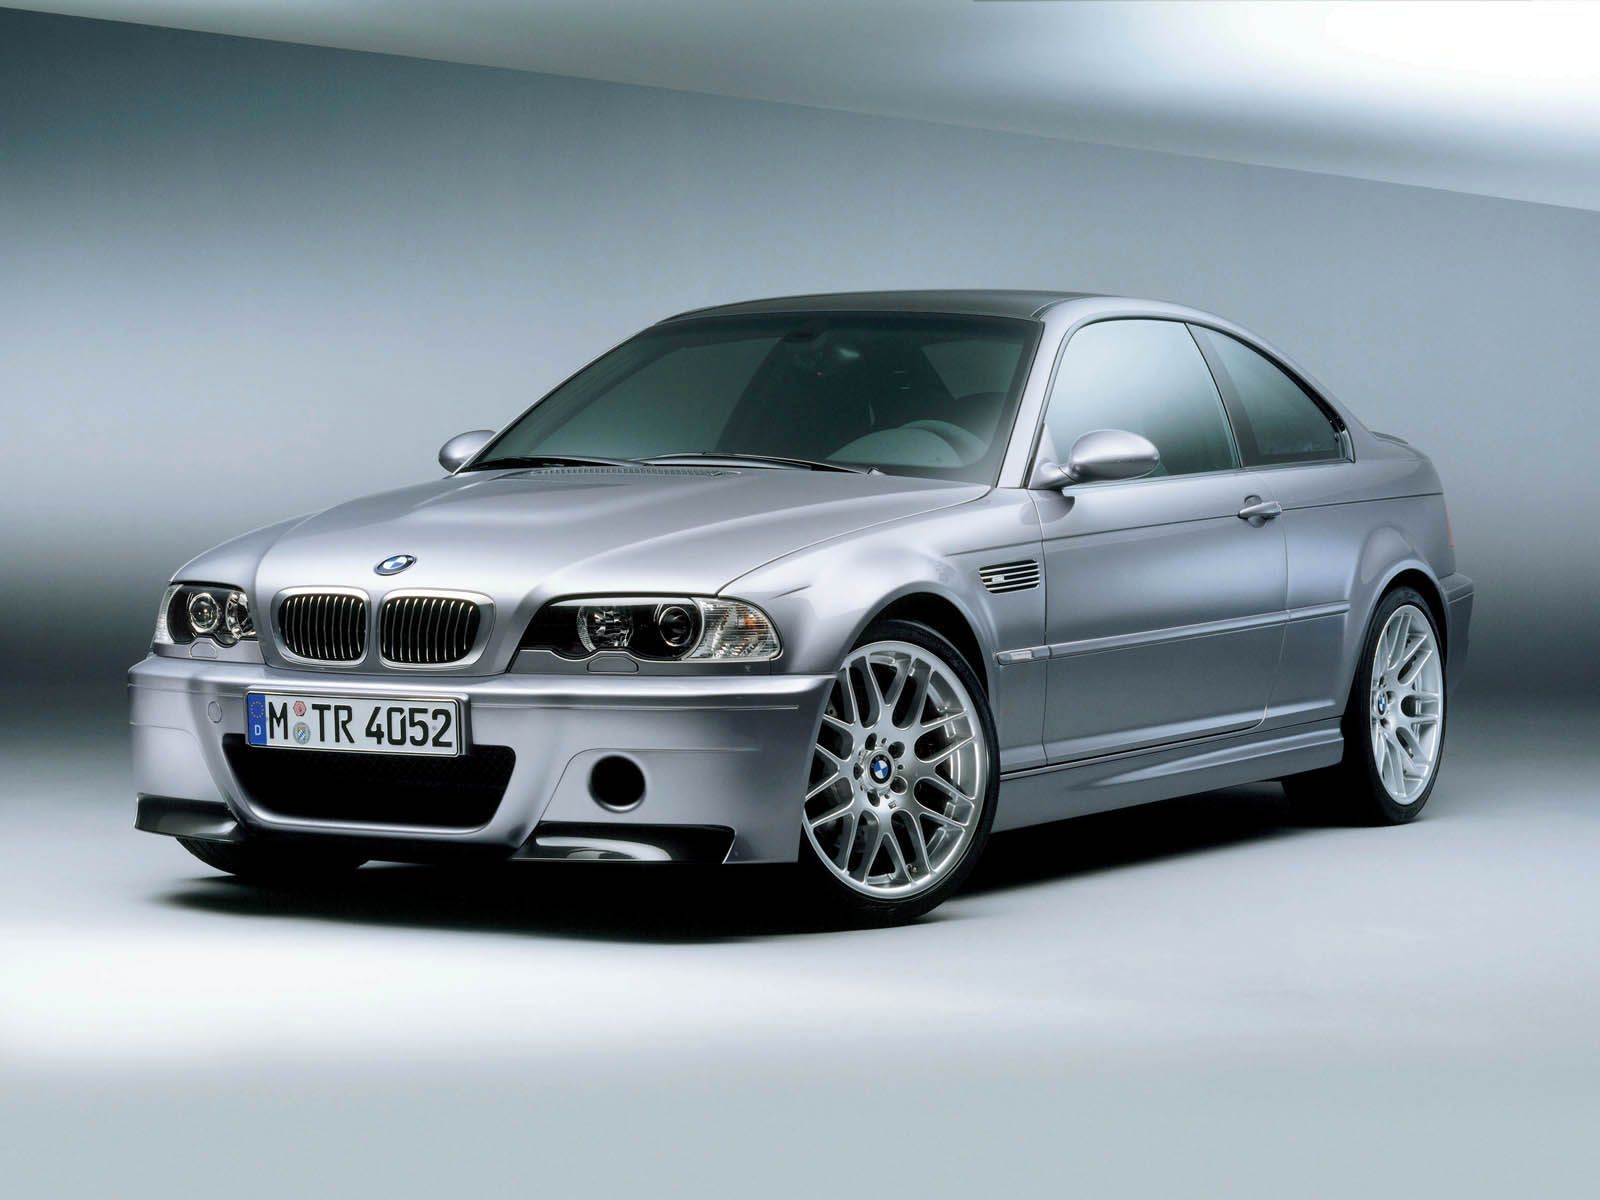 Silver 2004 BMW M3 CSL